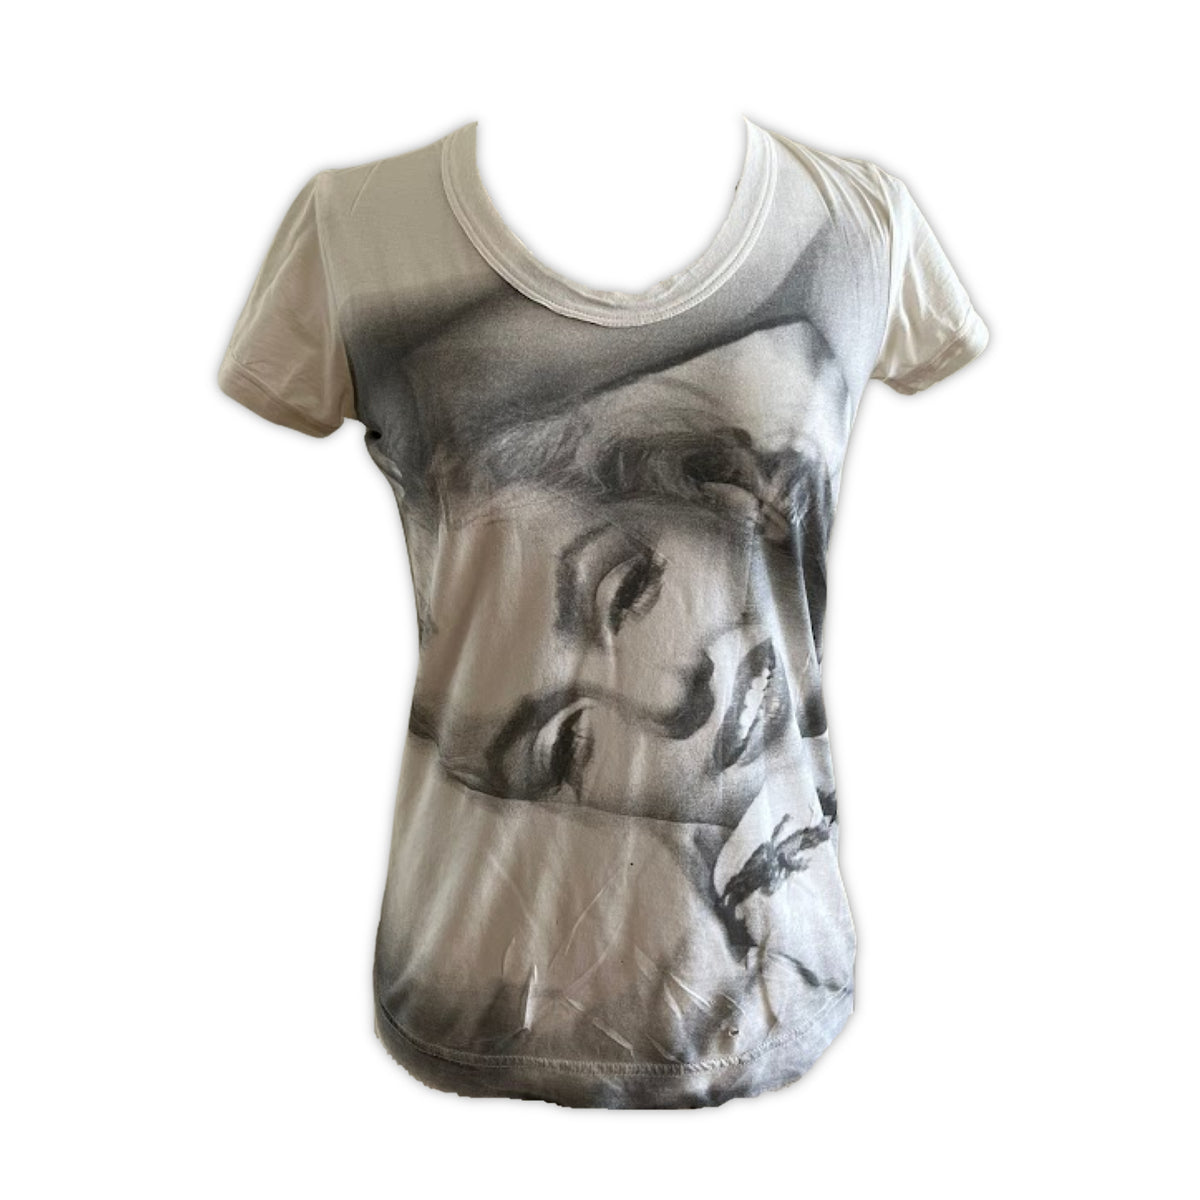 DOLCE & GABBANA Marilyn Monroe Cream Graphic T-Shirt | Size 38 IT